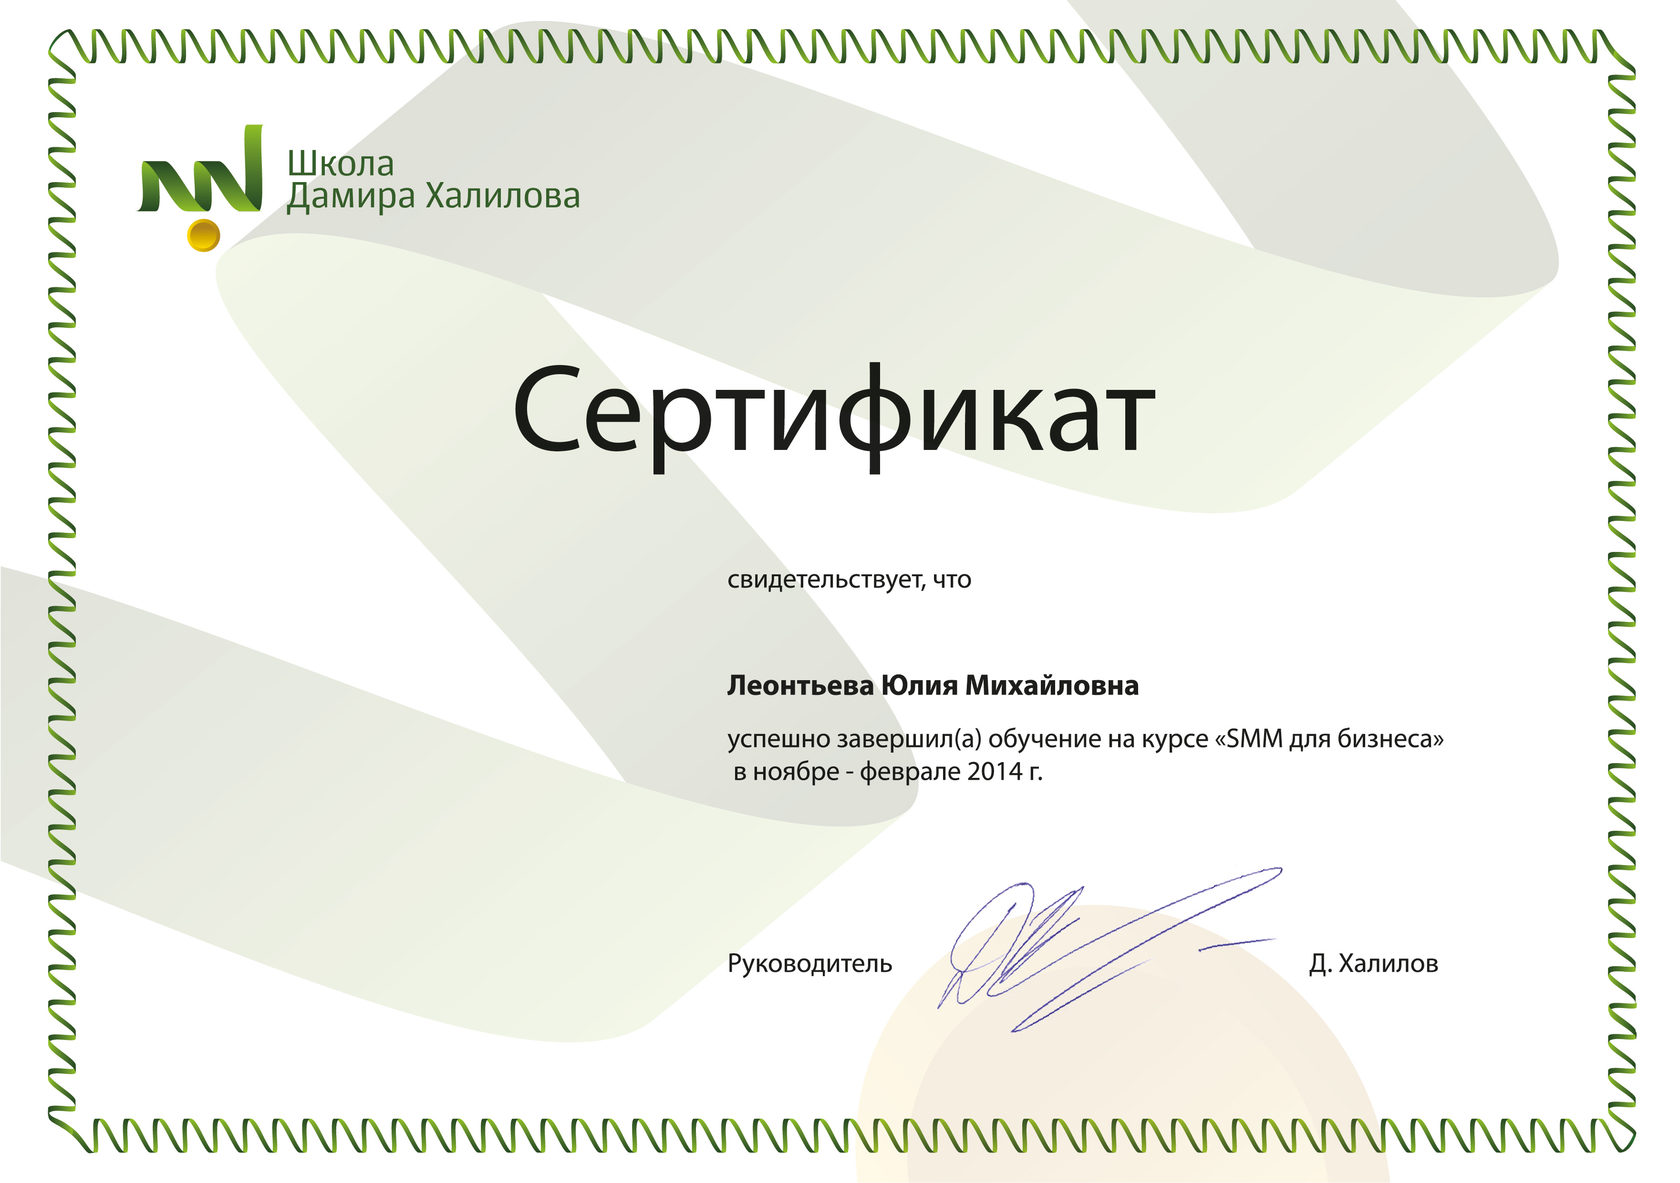 Сертификат Smm специалиста